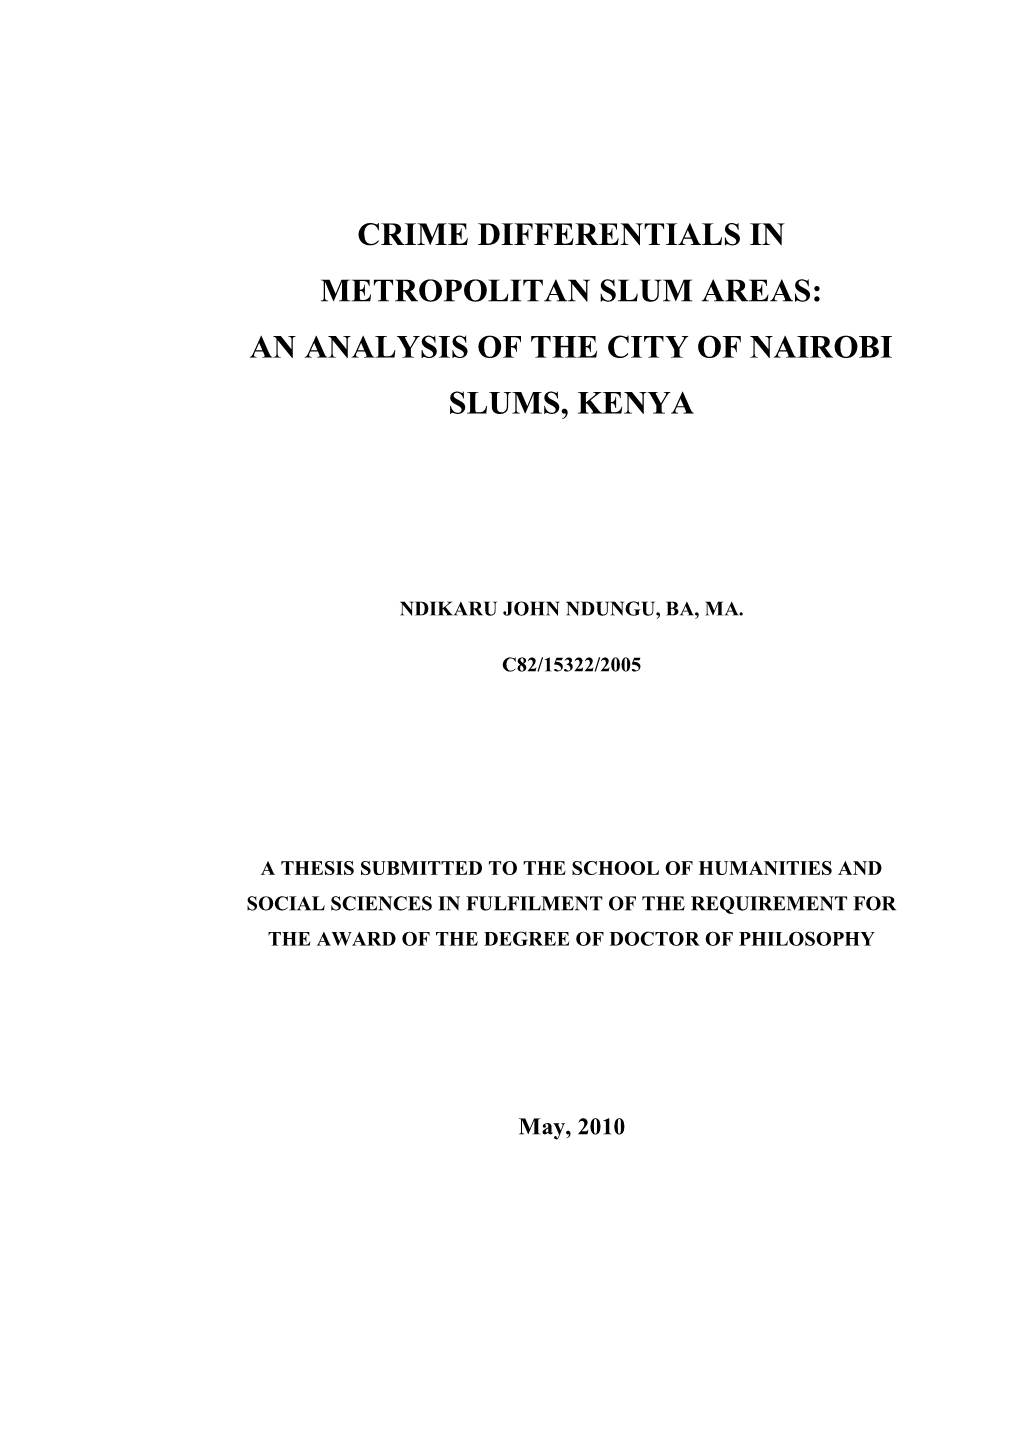 Crime Differentials in Metropolitan Slum Areas: an Analysis of the City of Nairobi Slums, Kenya